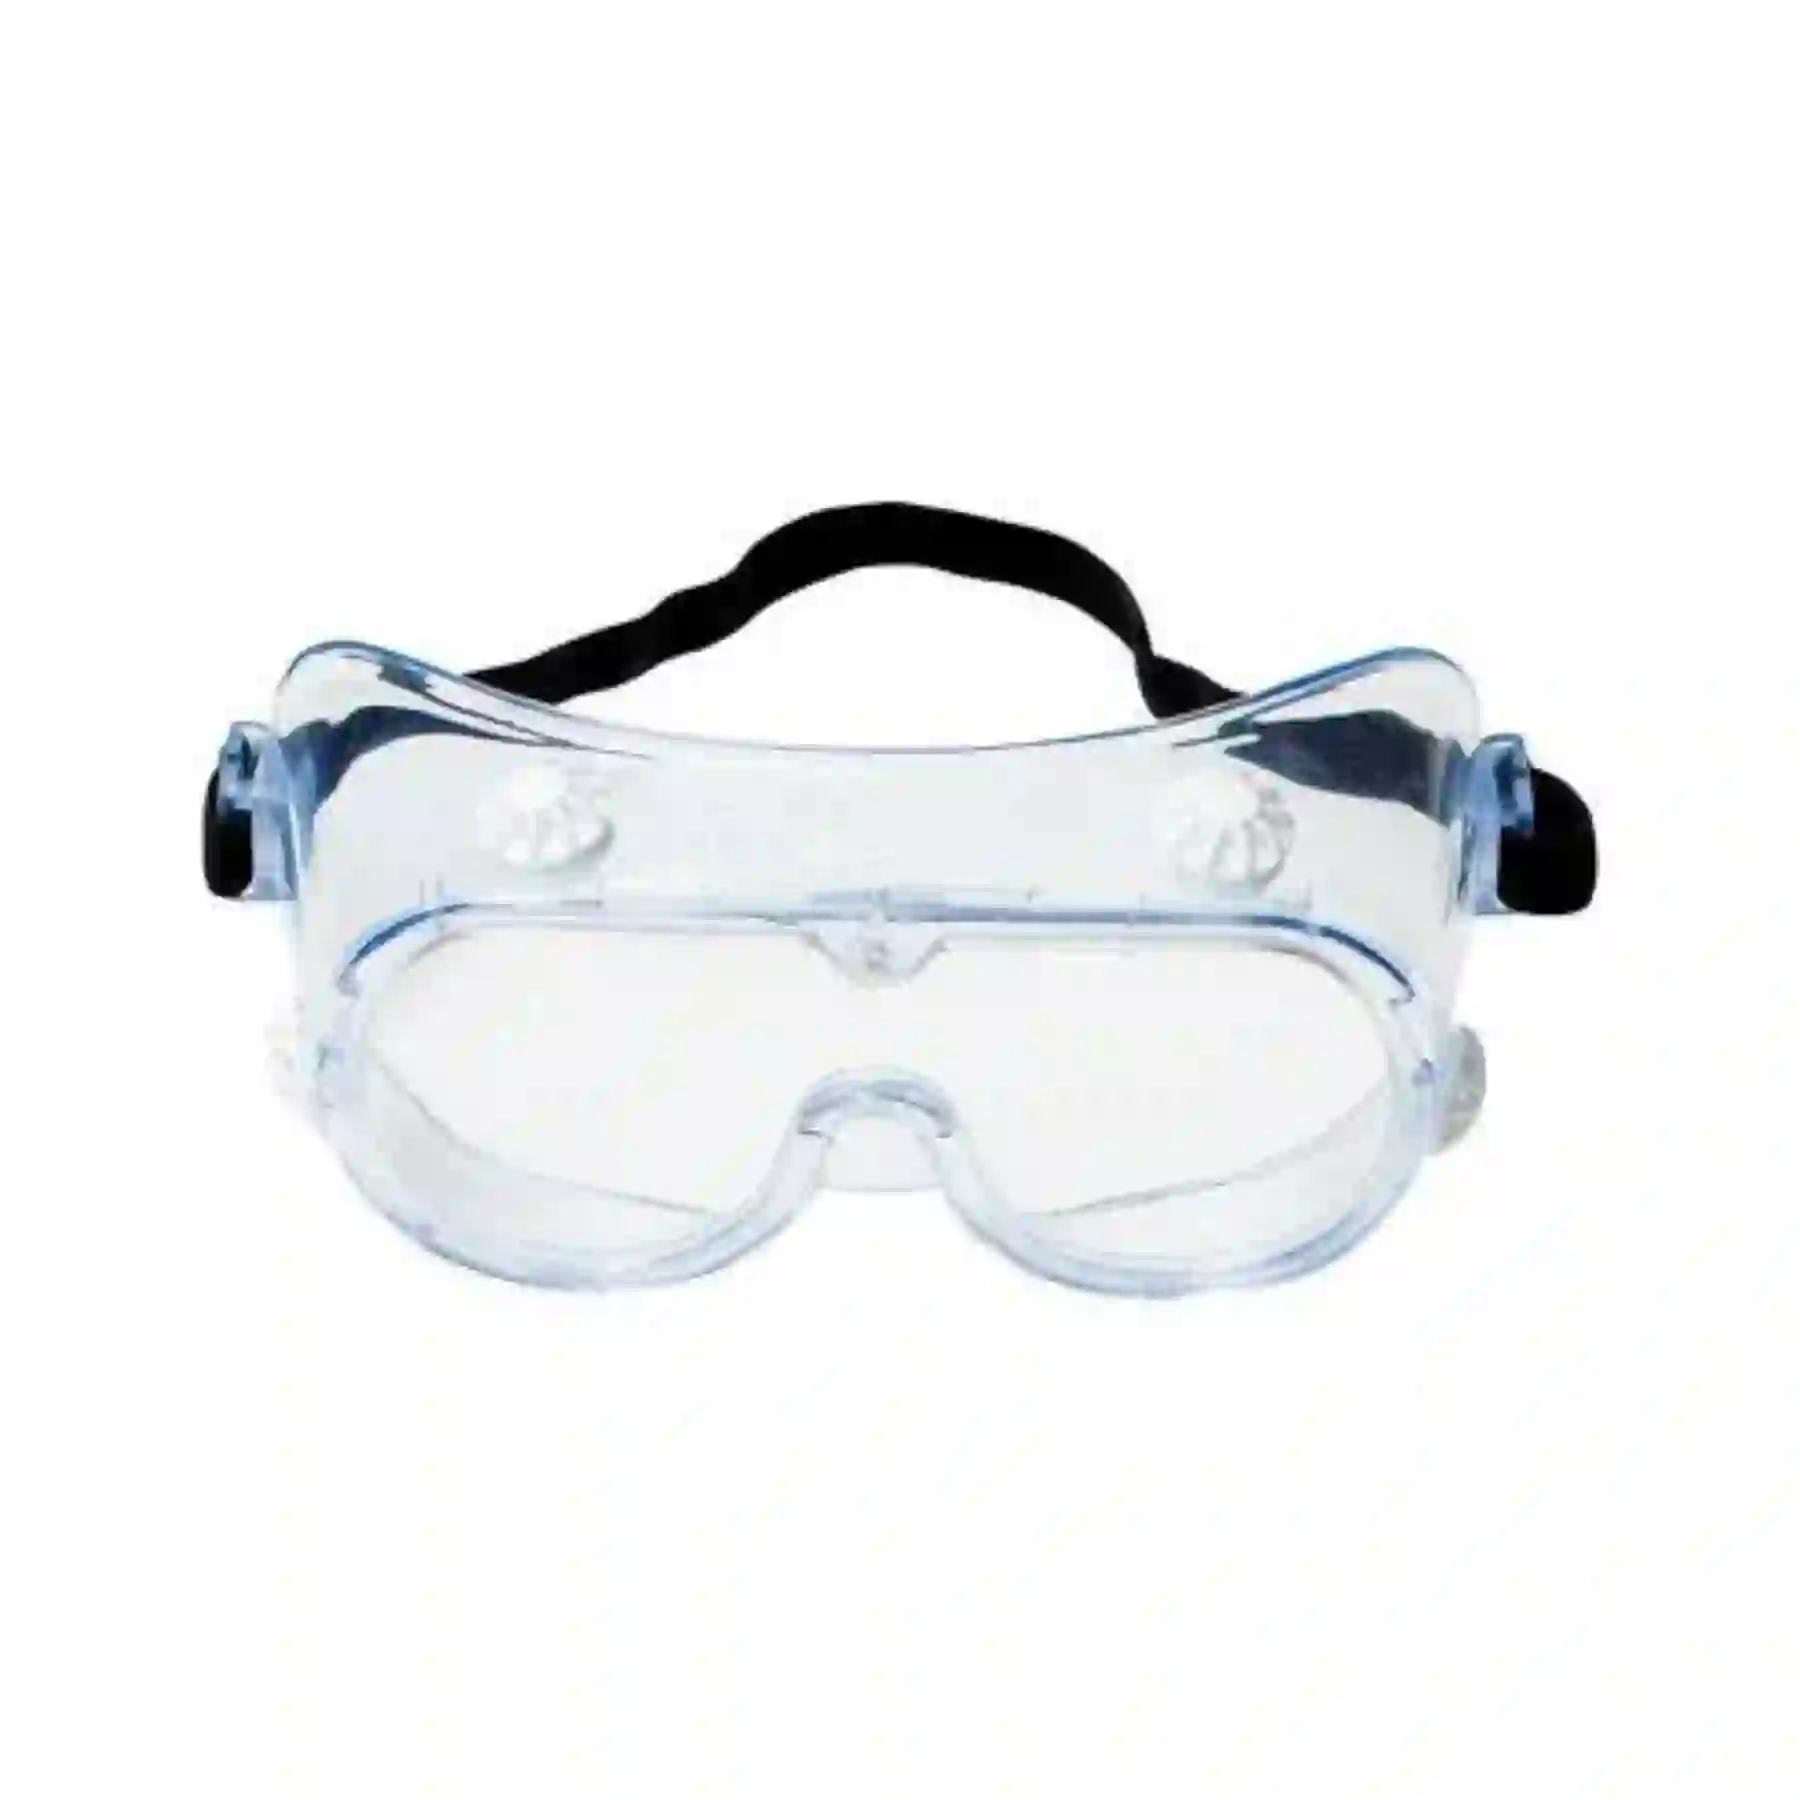 3M 334 Chemical Splash Clear Goggle